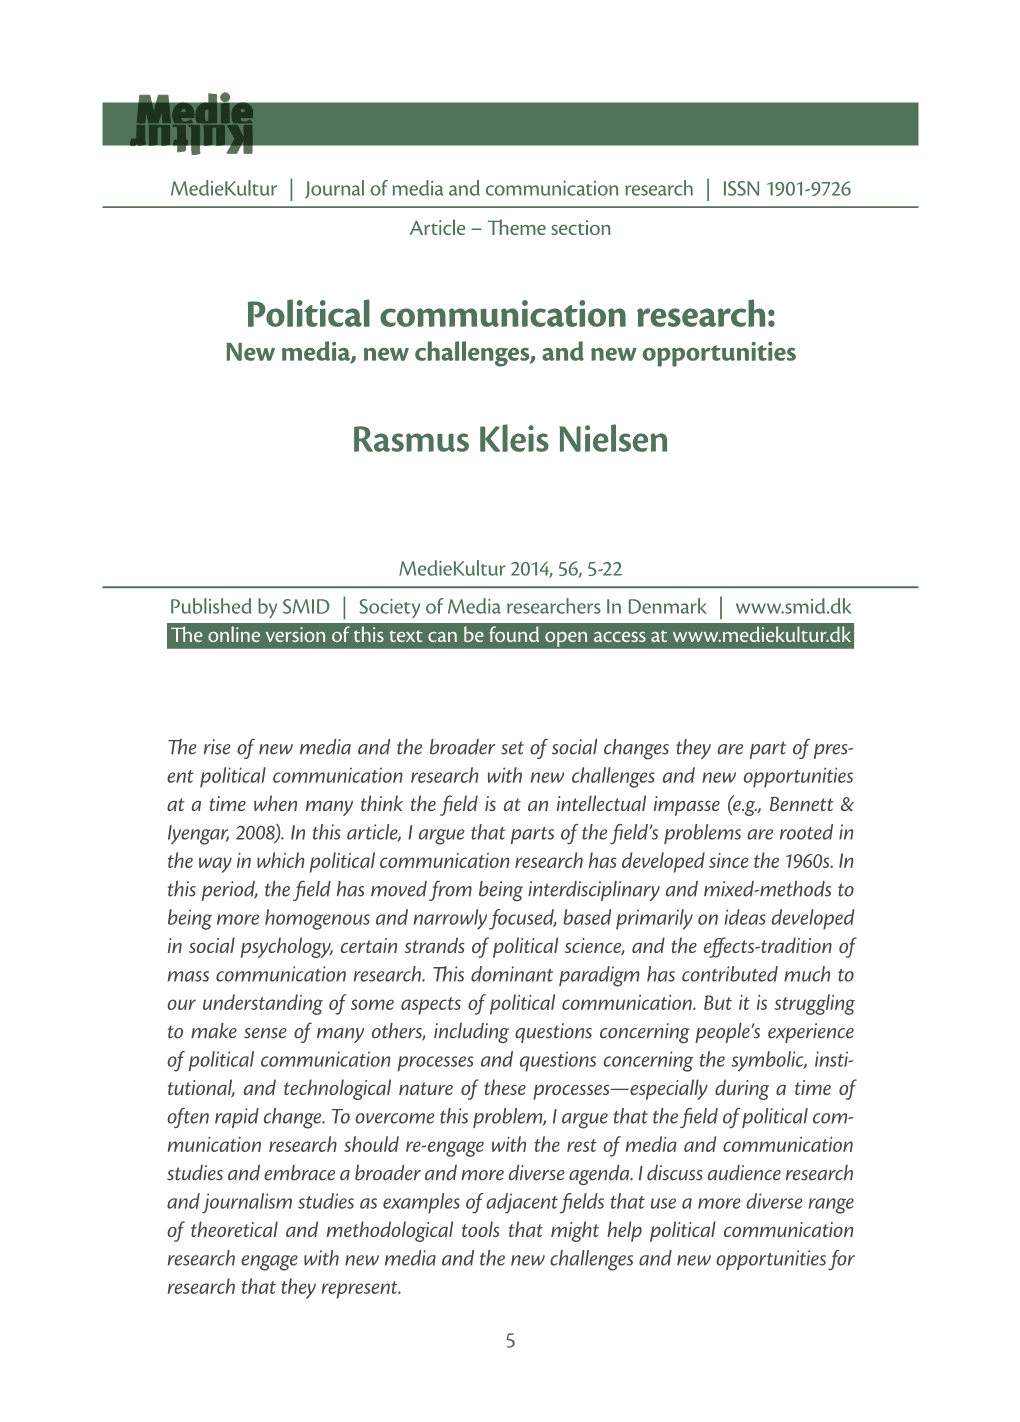 Political Communication Research: Rasmus Kleis Nielsen